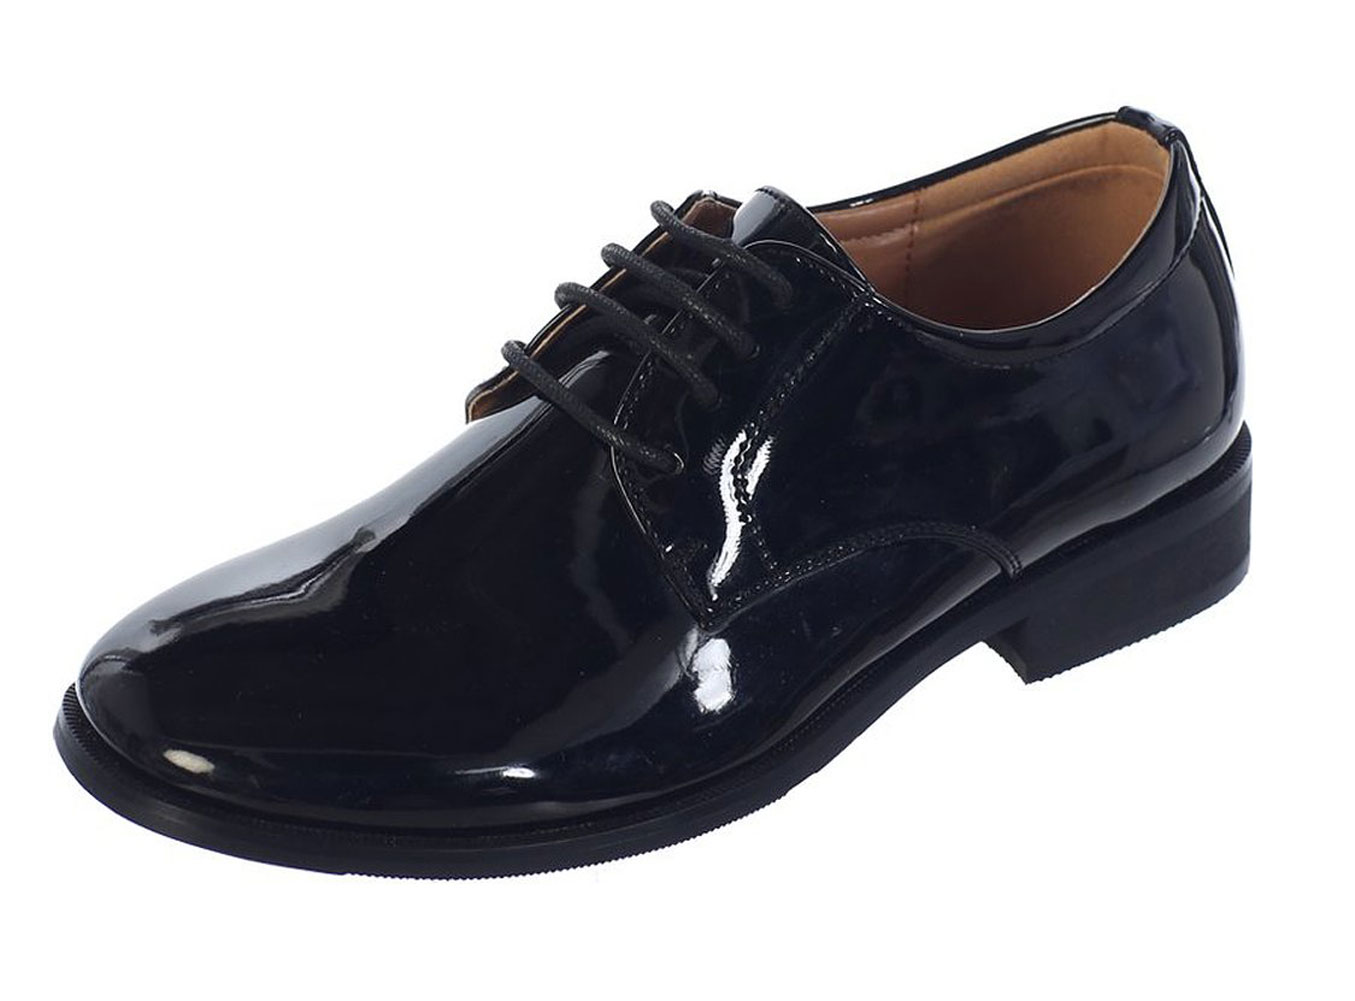 Avery Hill Boys Shiny or Shiny Patent Leather Shoes Bk Shiny Littlekid 10